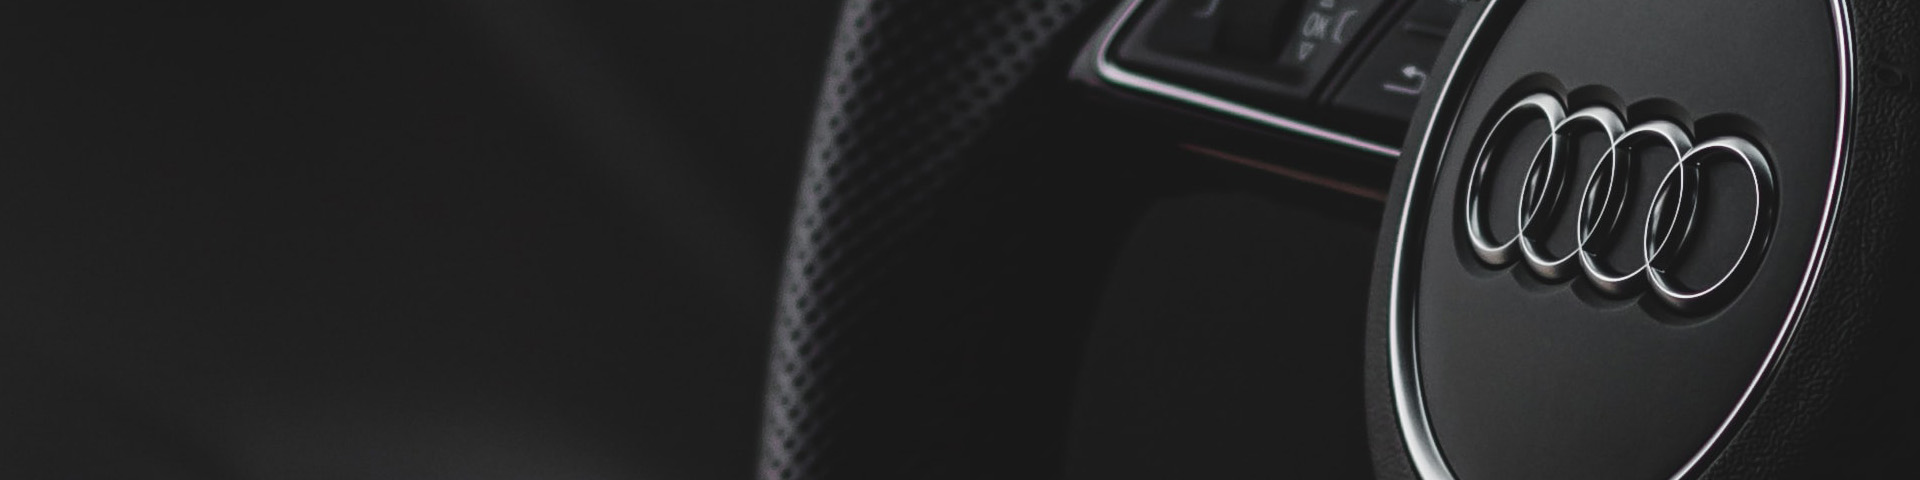 Audi Q3 Backdrop